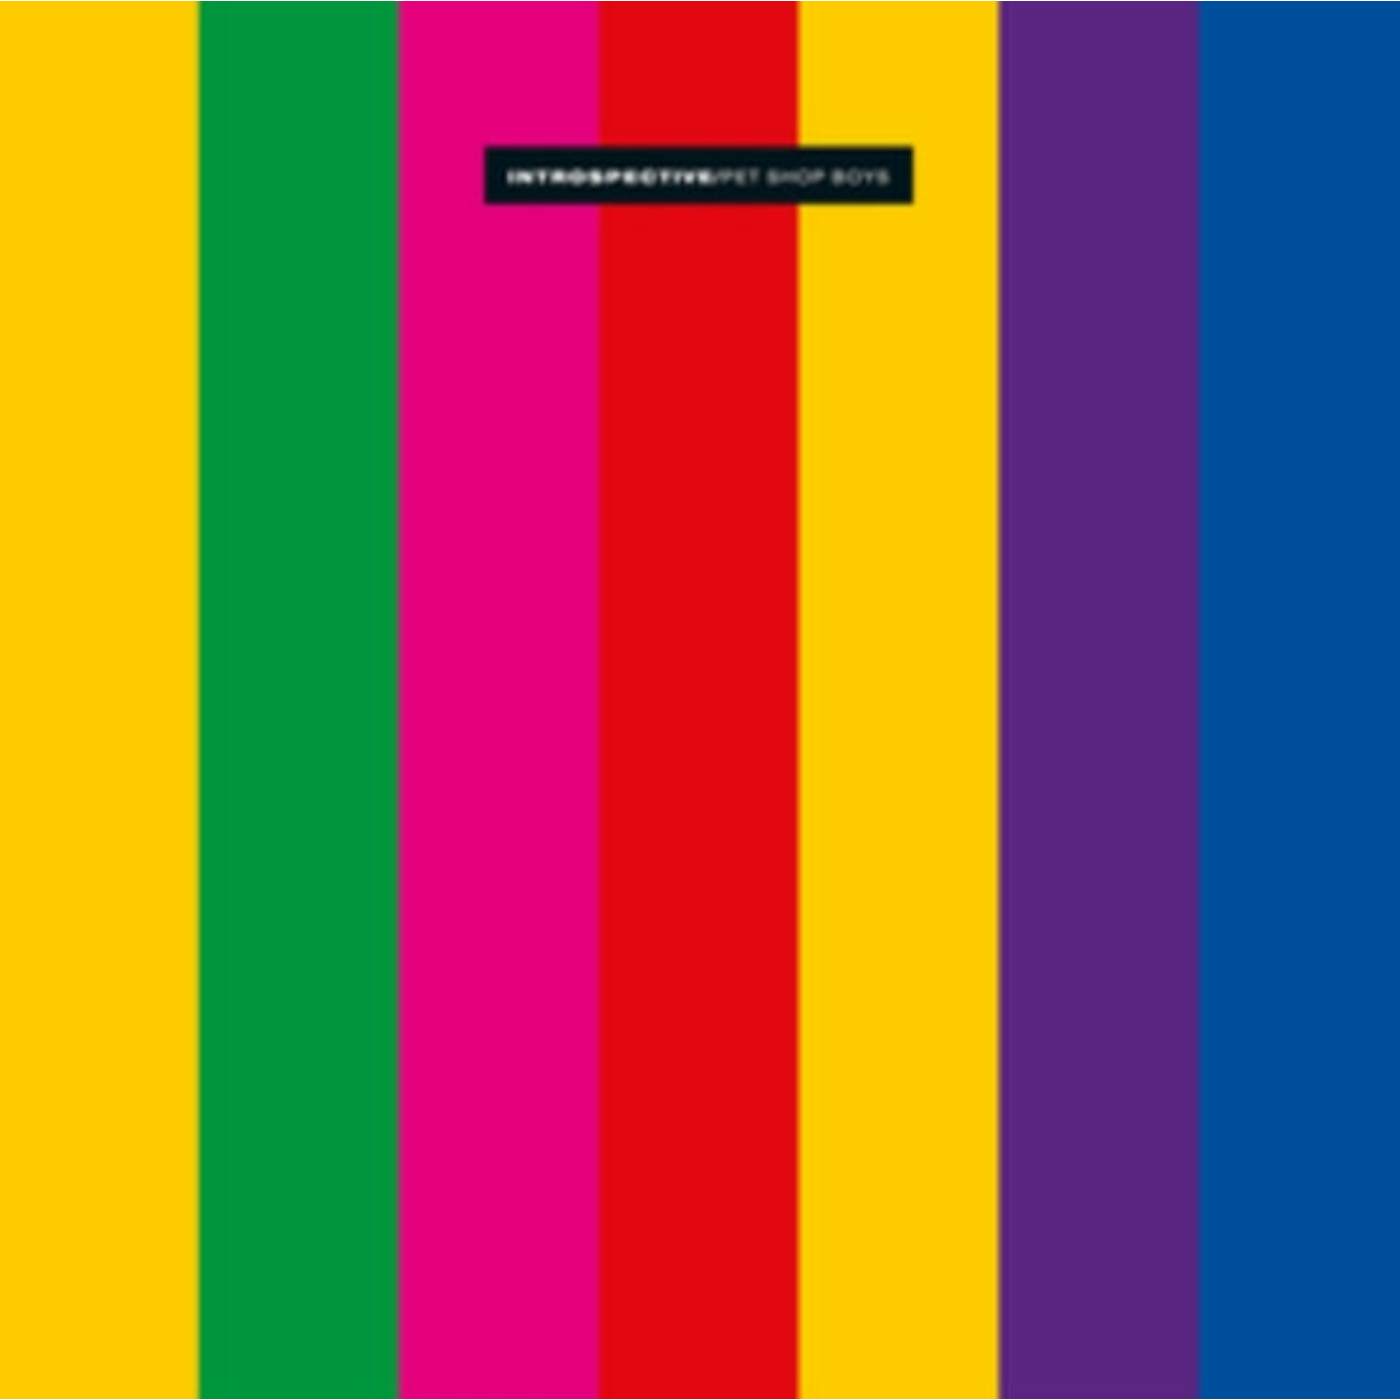 Pet Shop Boys LP Vinyl Record - Introspective (20. 18  Remastered Version)